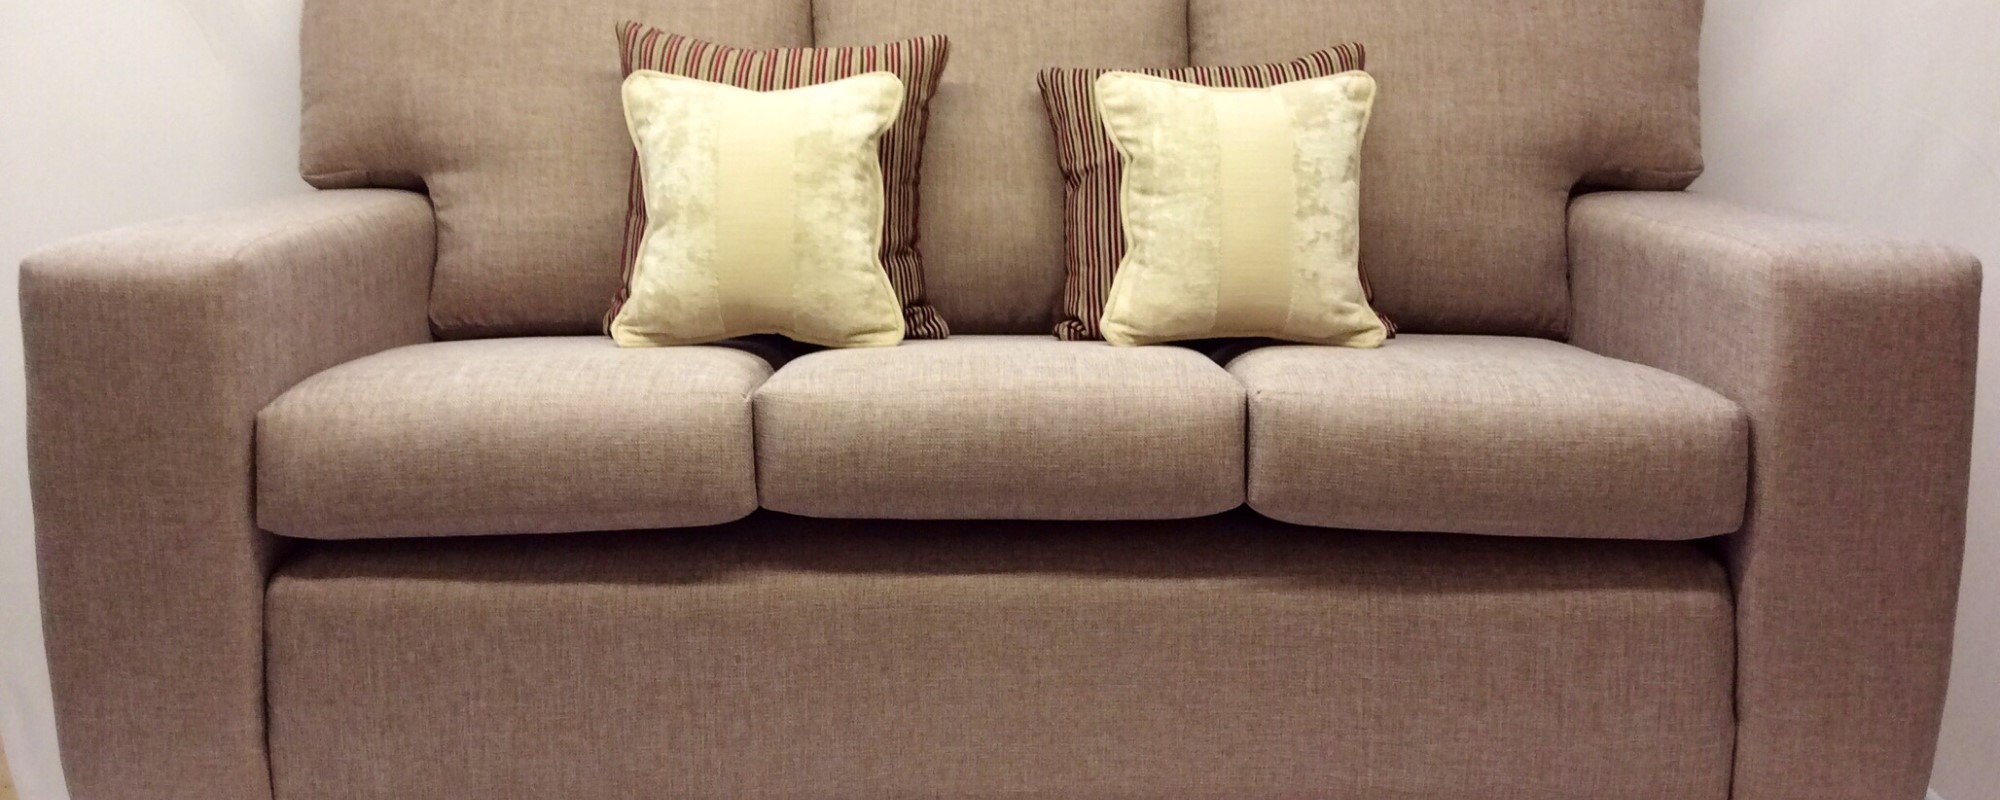 monaco sofa designs ralvern upholstery cannock